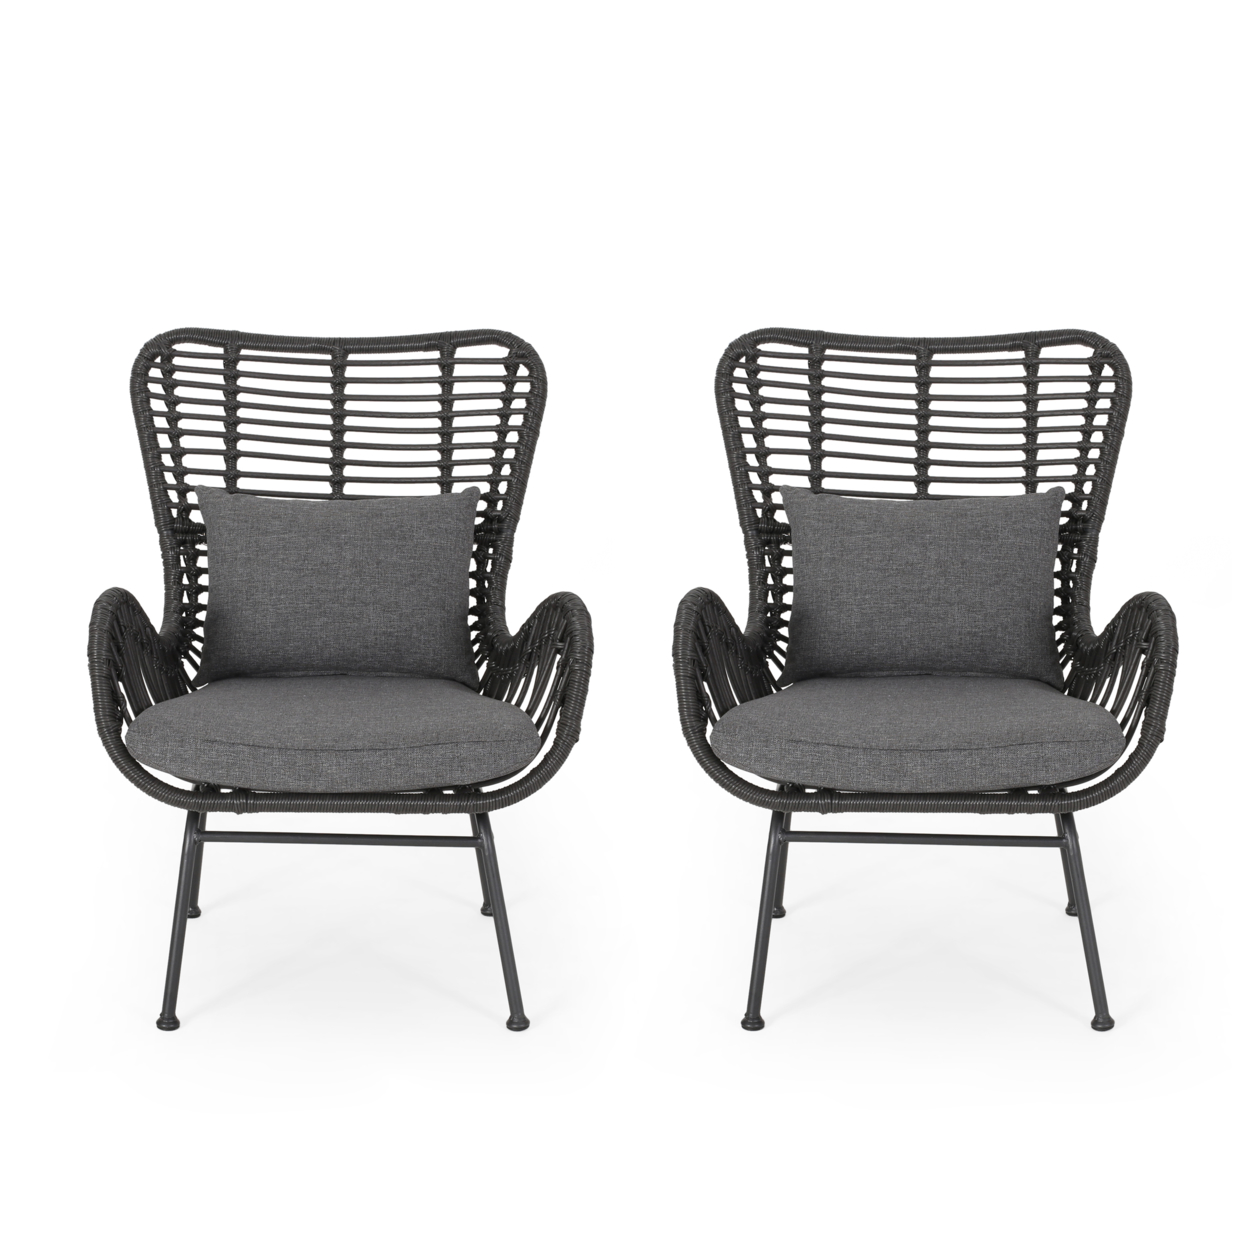 Gloria Indoor Wicker Club Chairs With Cushions (Set Of 2) - Gray, Black, Dark Gray